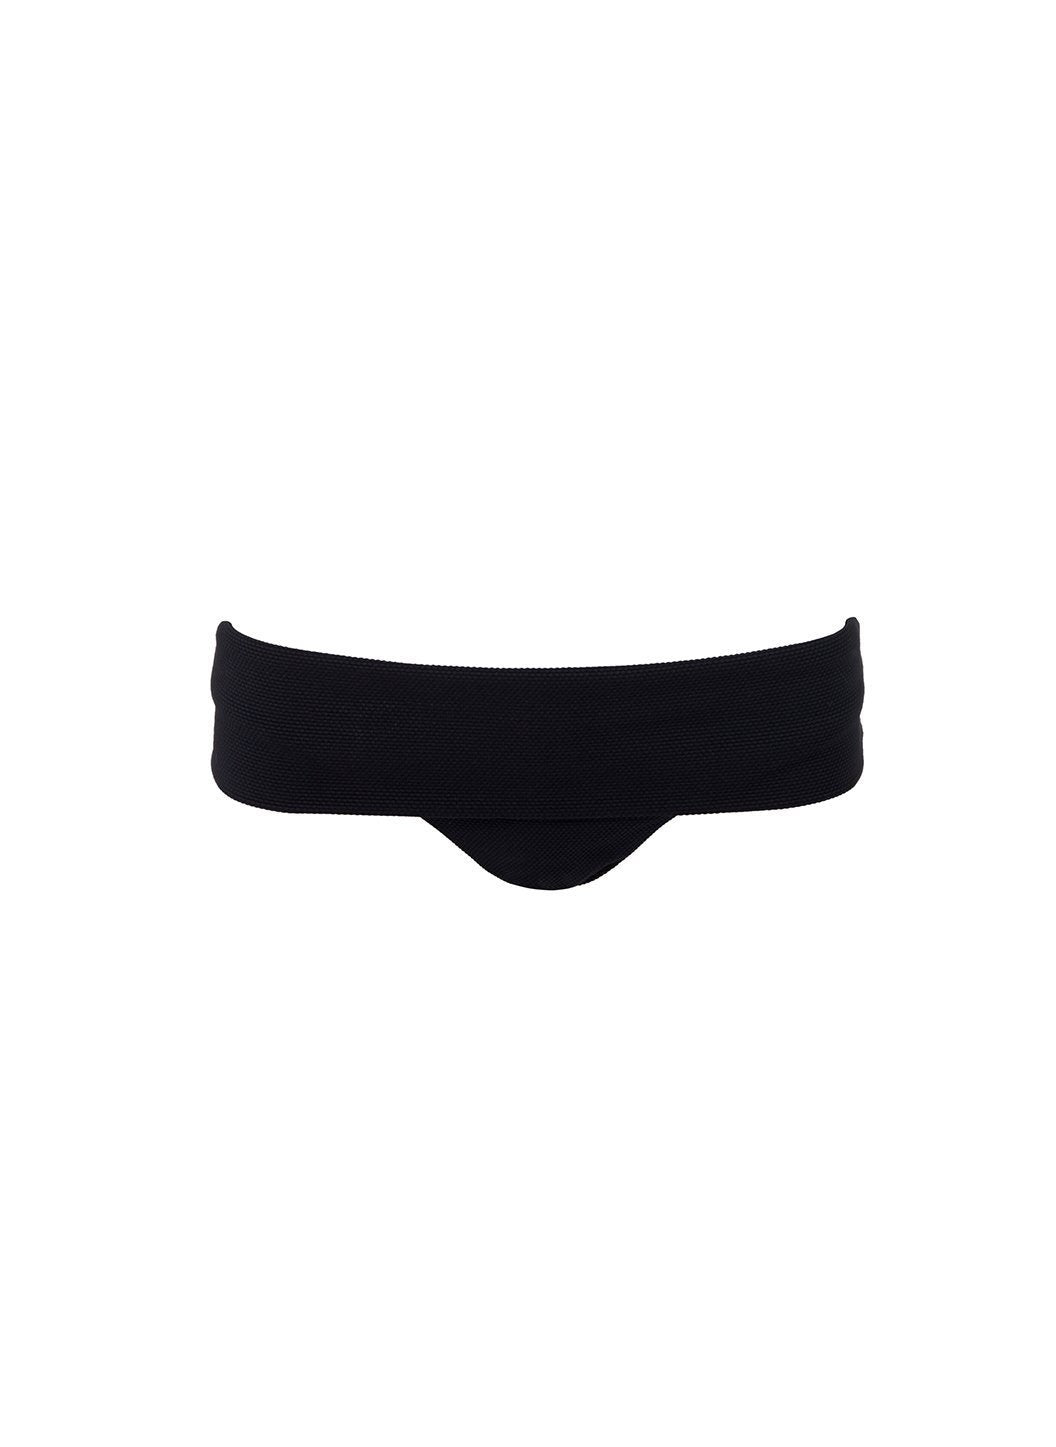 Provence Black Pique Bikini Bottom